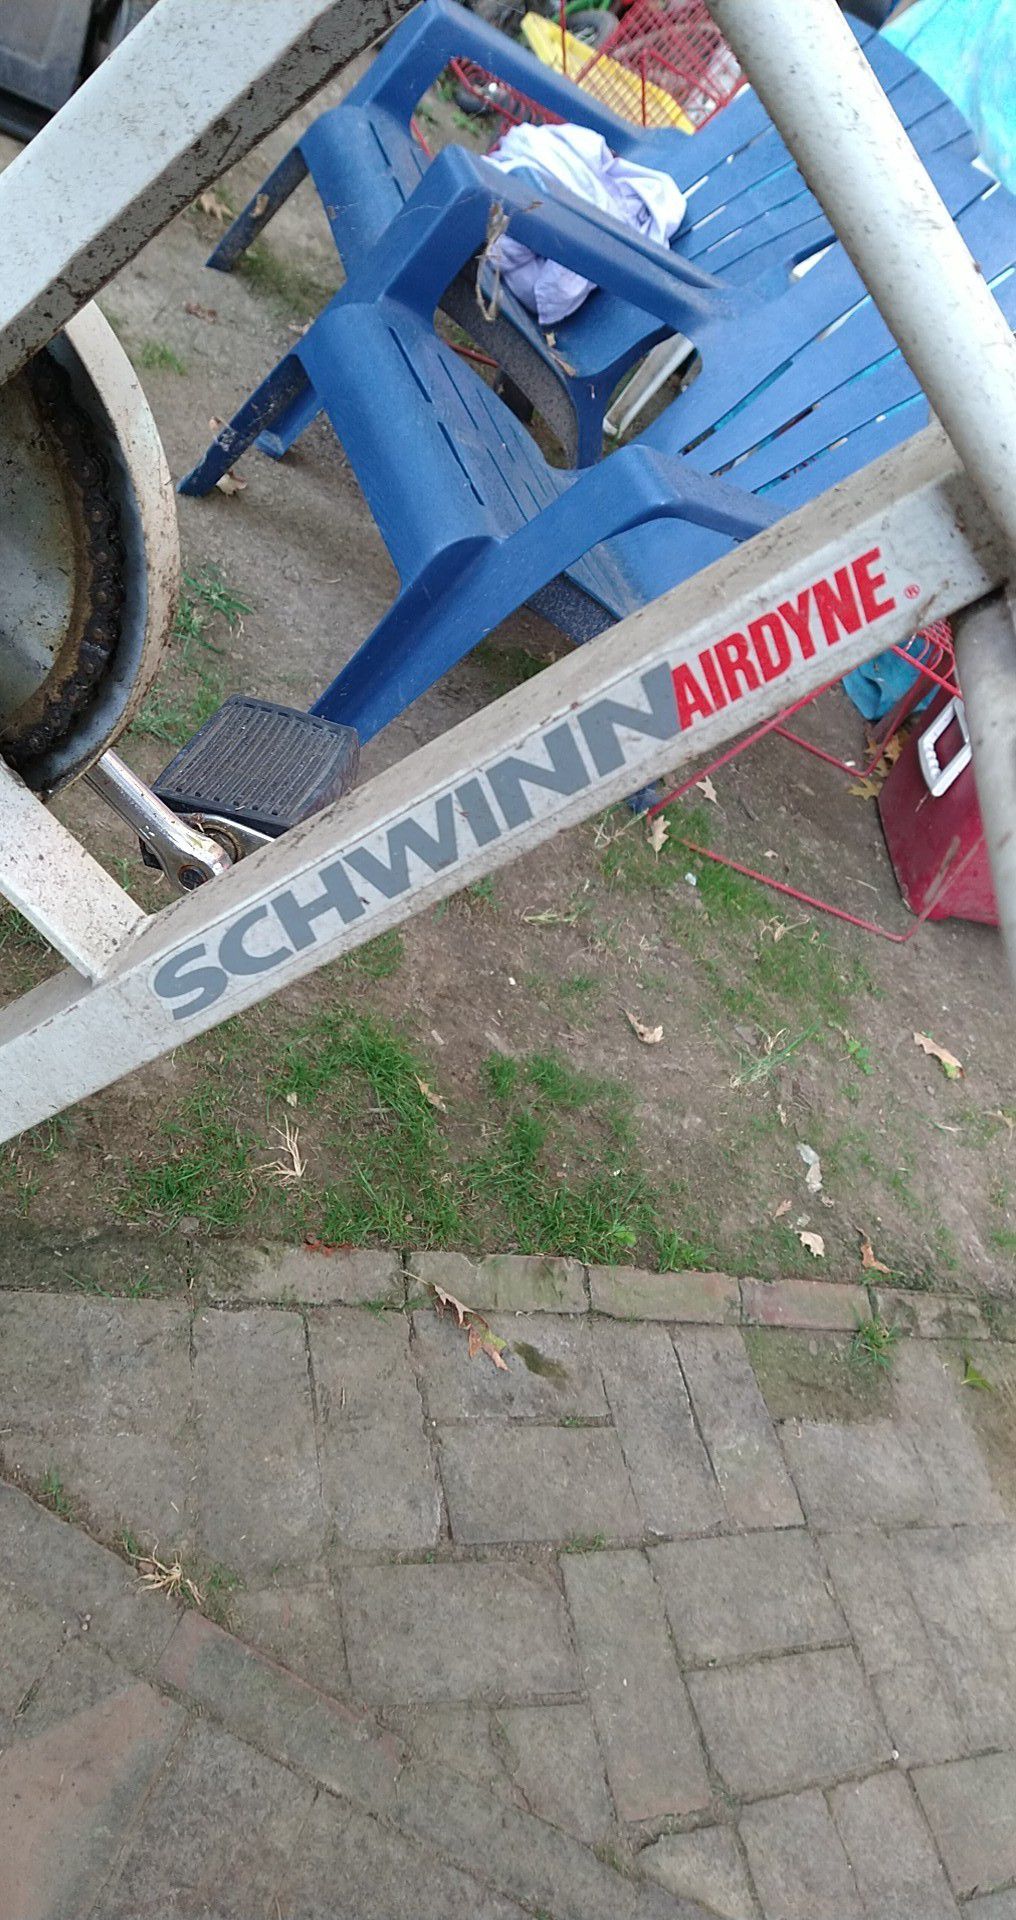 Schwinn airdyne bike